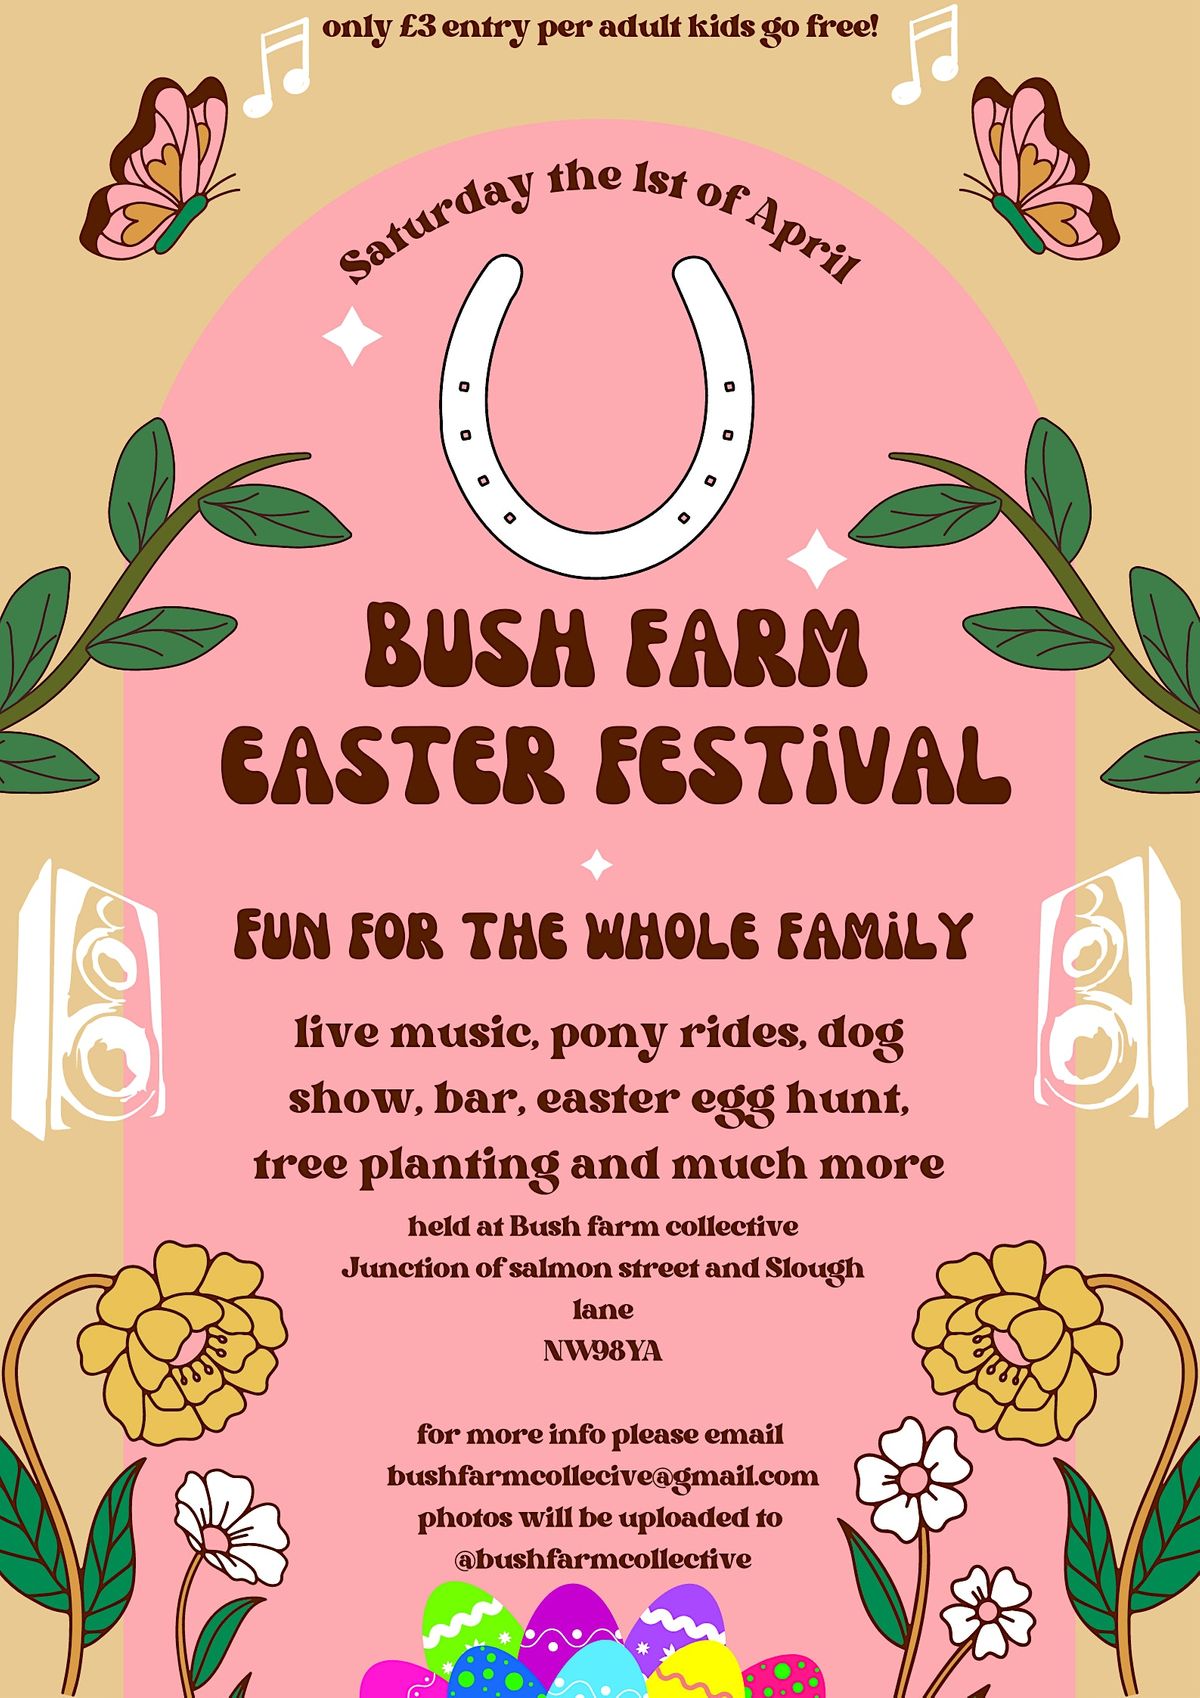 Bush Farm Easter festival